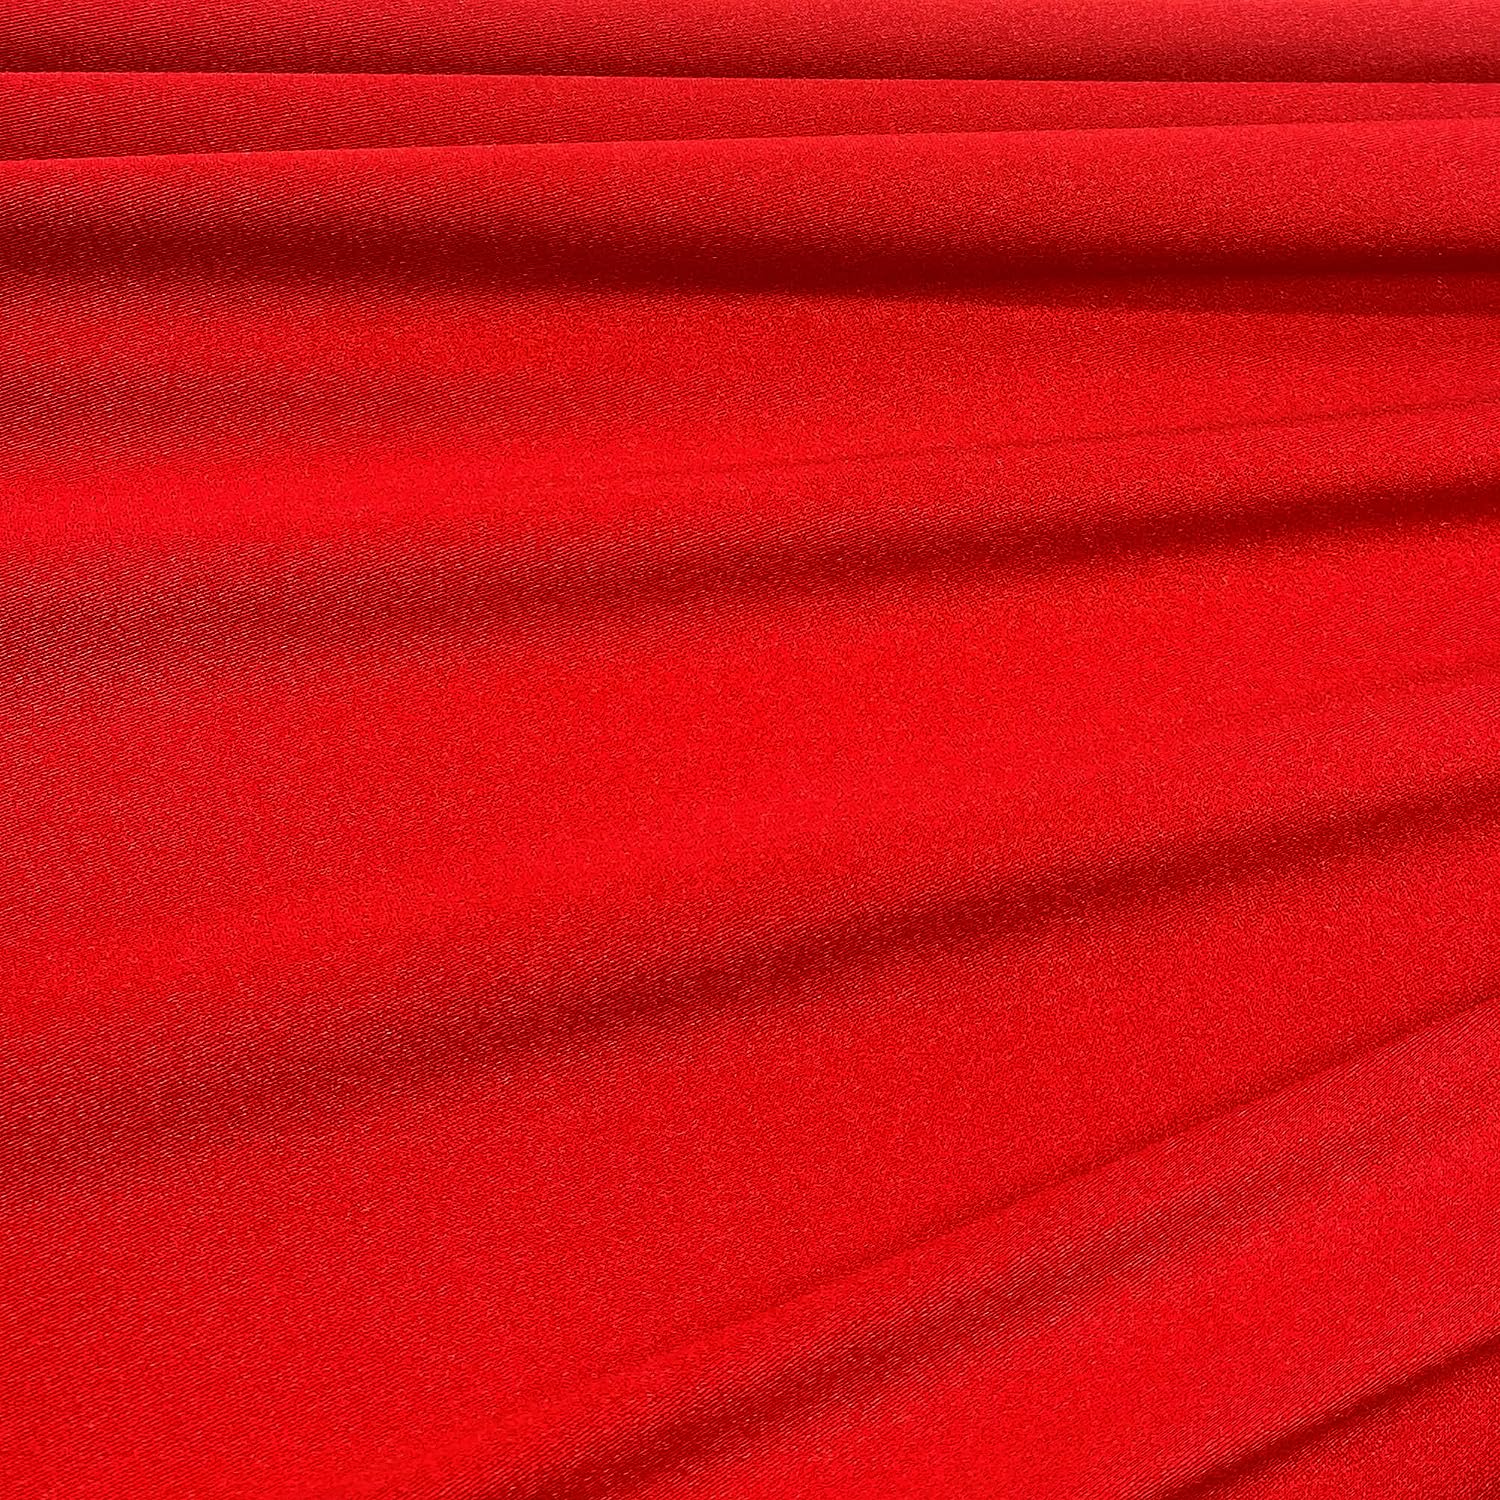 Red Luxury Nylon Spandex Fabric By The YardICE FABRICSICE FABRICSBy The Yard (58" Width)Red Luxury Nylon Spandex Fabric By The Yard ICE FABRICS